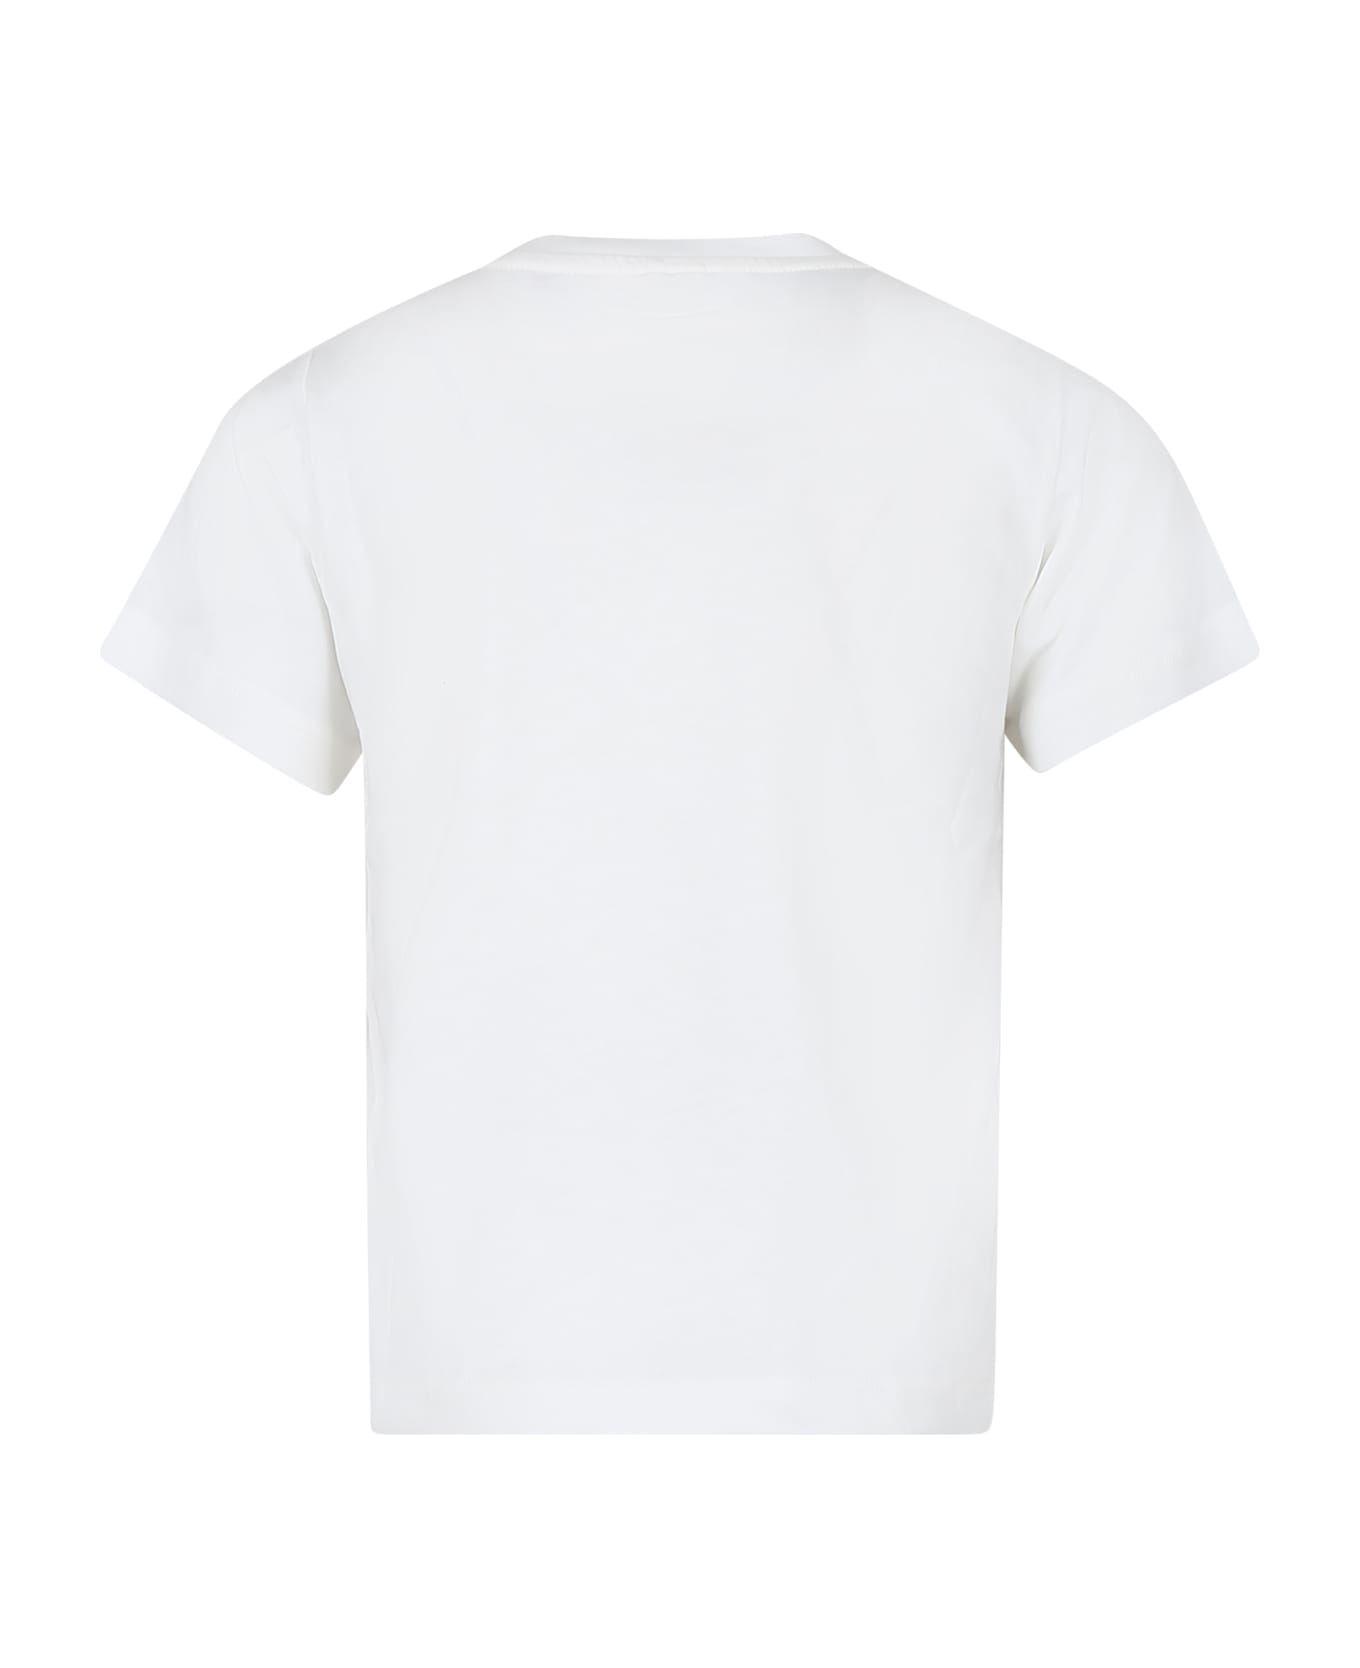 Stella McCartney Kids Ivory T-shirt For Boy With Shark Print - Ivory